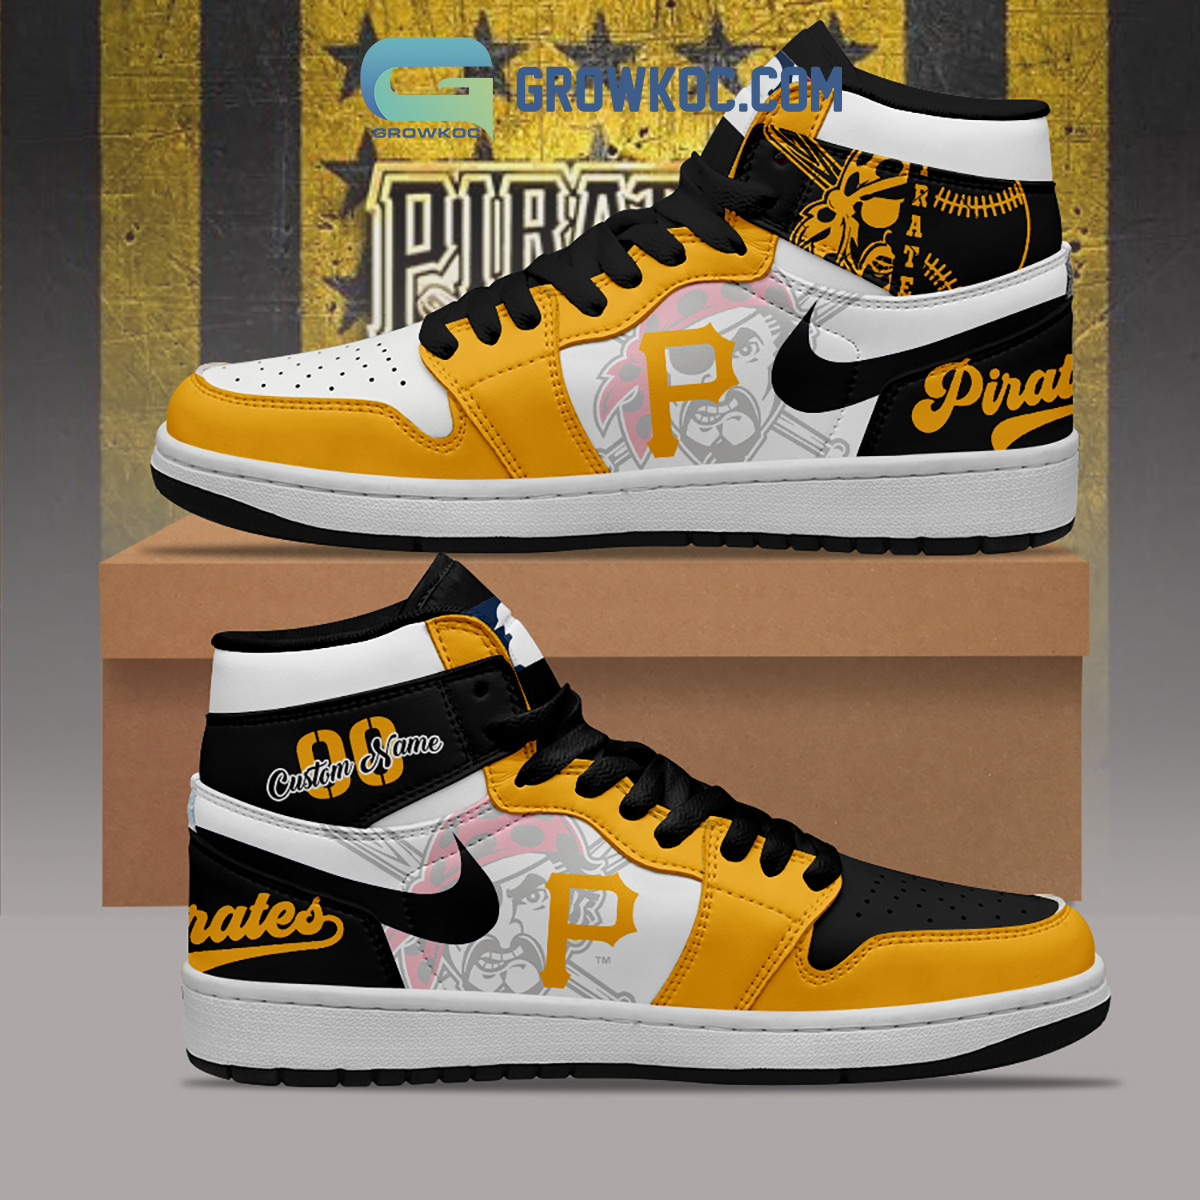 Philadelphia Phillies Air Jordan Hightop Shoes Custom Name